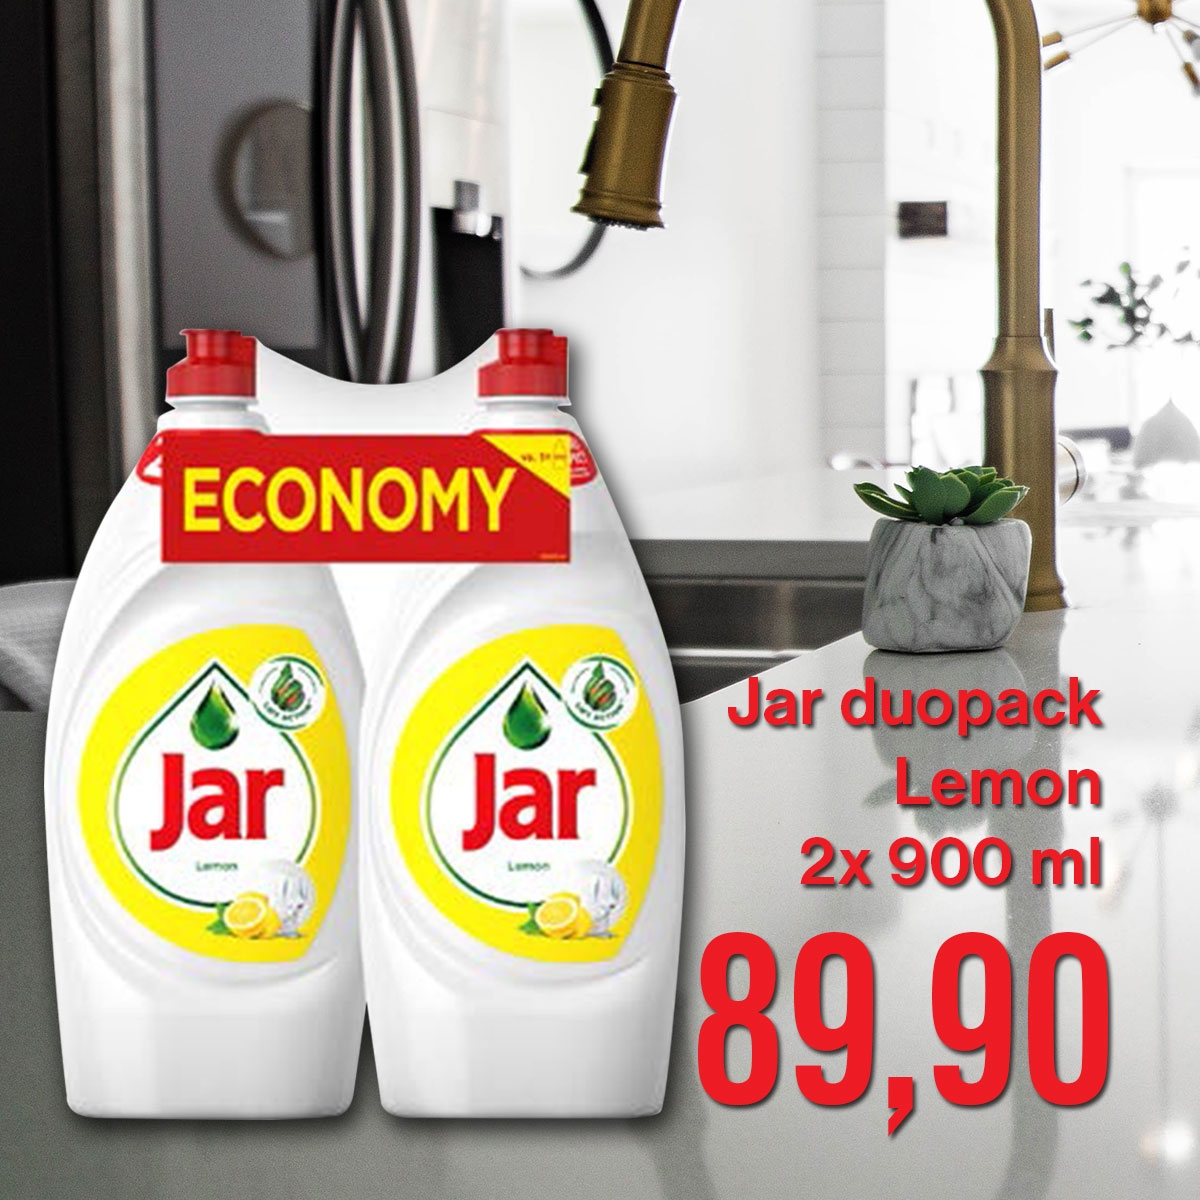 Jar duopack Lemon 2x 900 ml